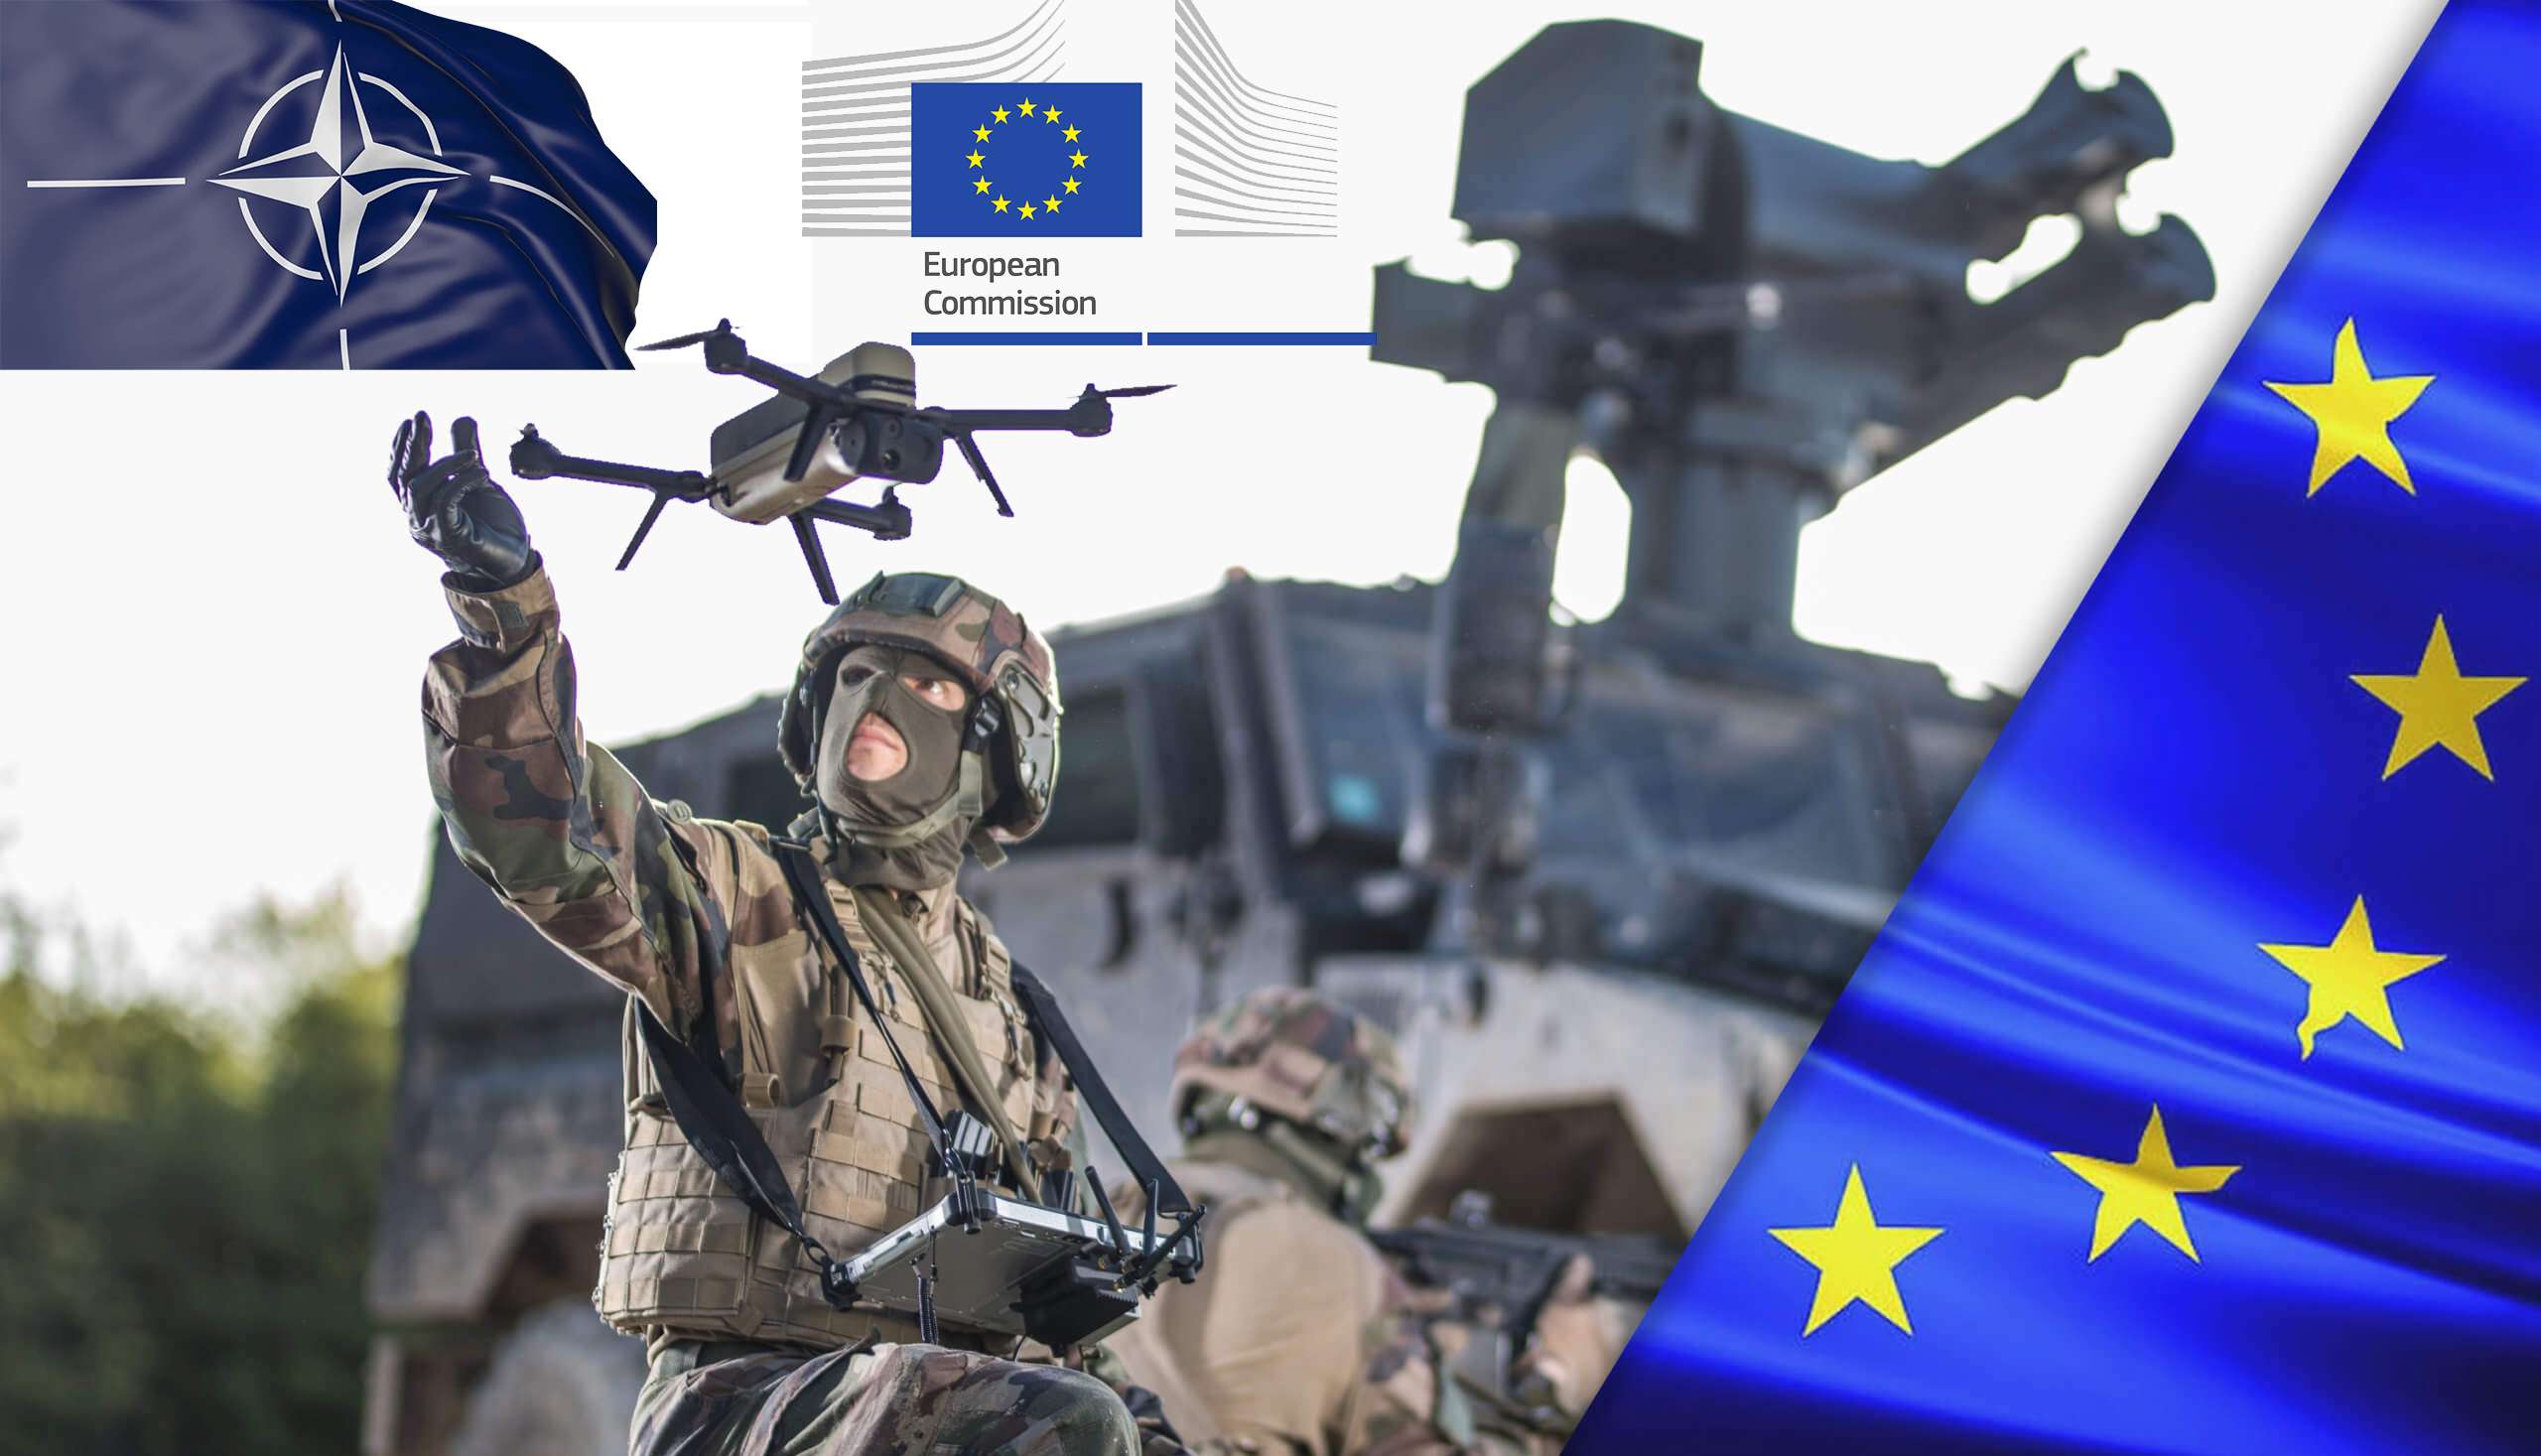 Iμπεριαλιστικά σχέδια ΕΕ ΗΠΑ ΝΑΤΟ σε βάρος των λαών